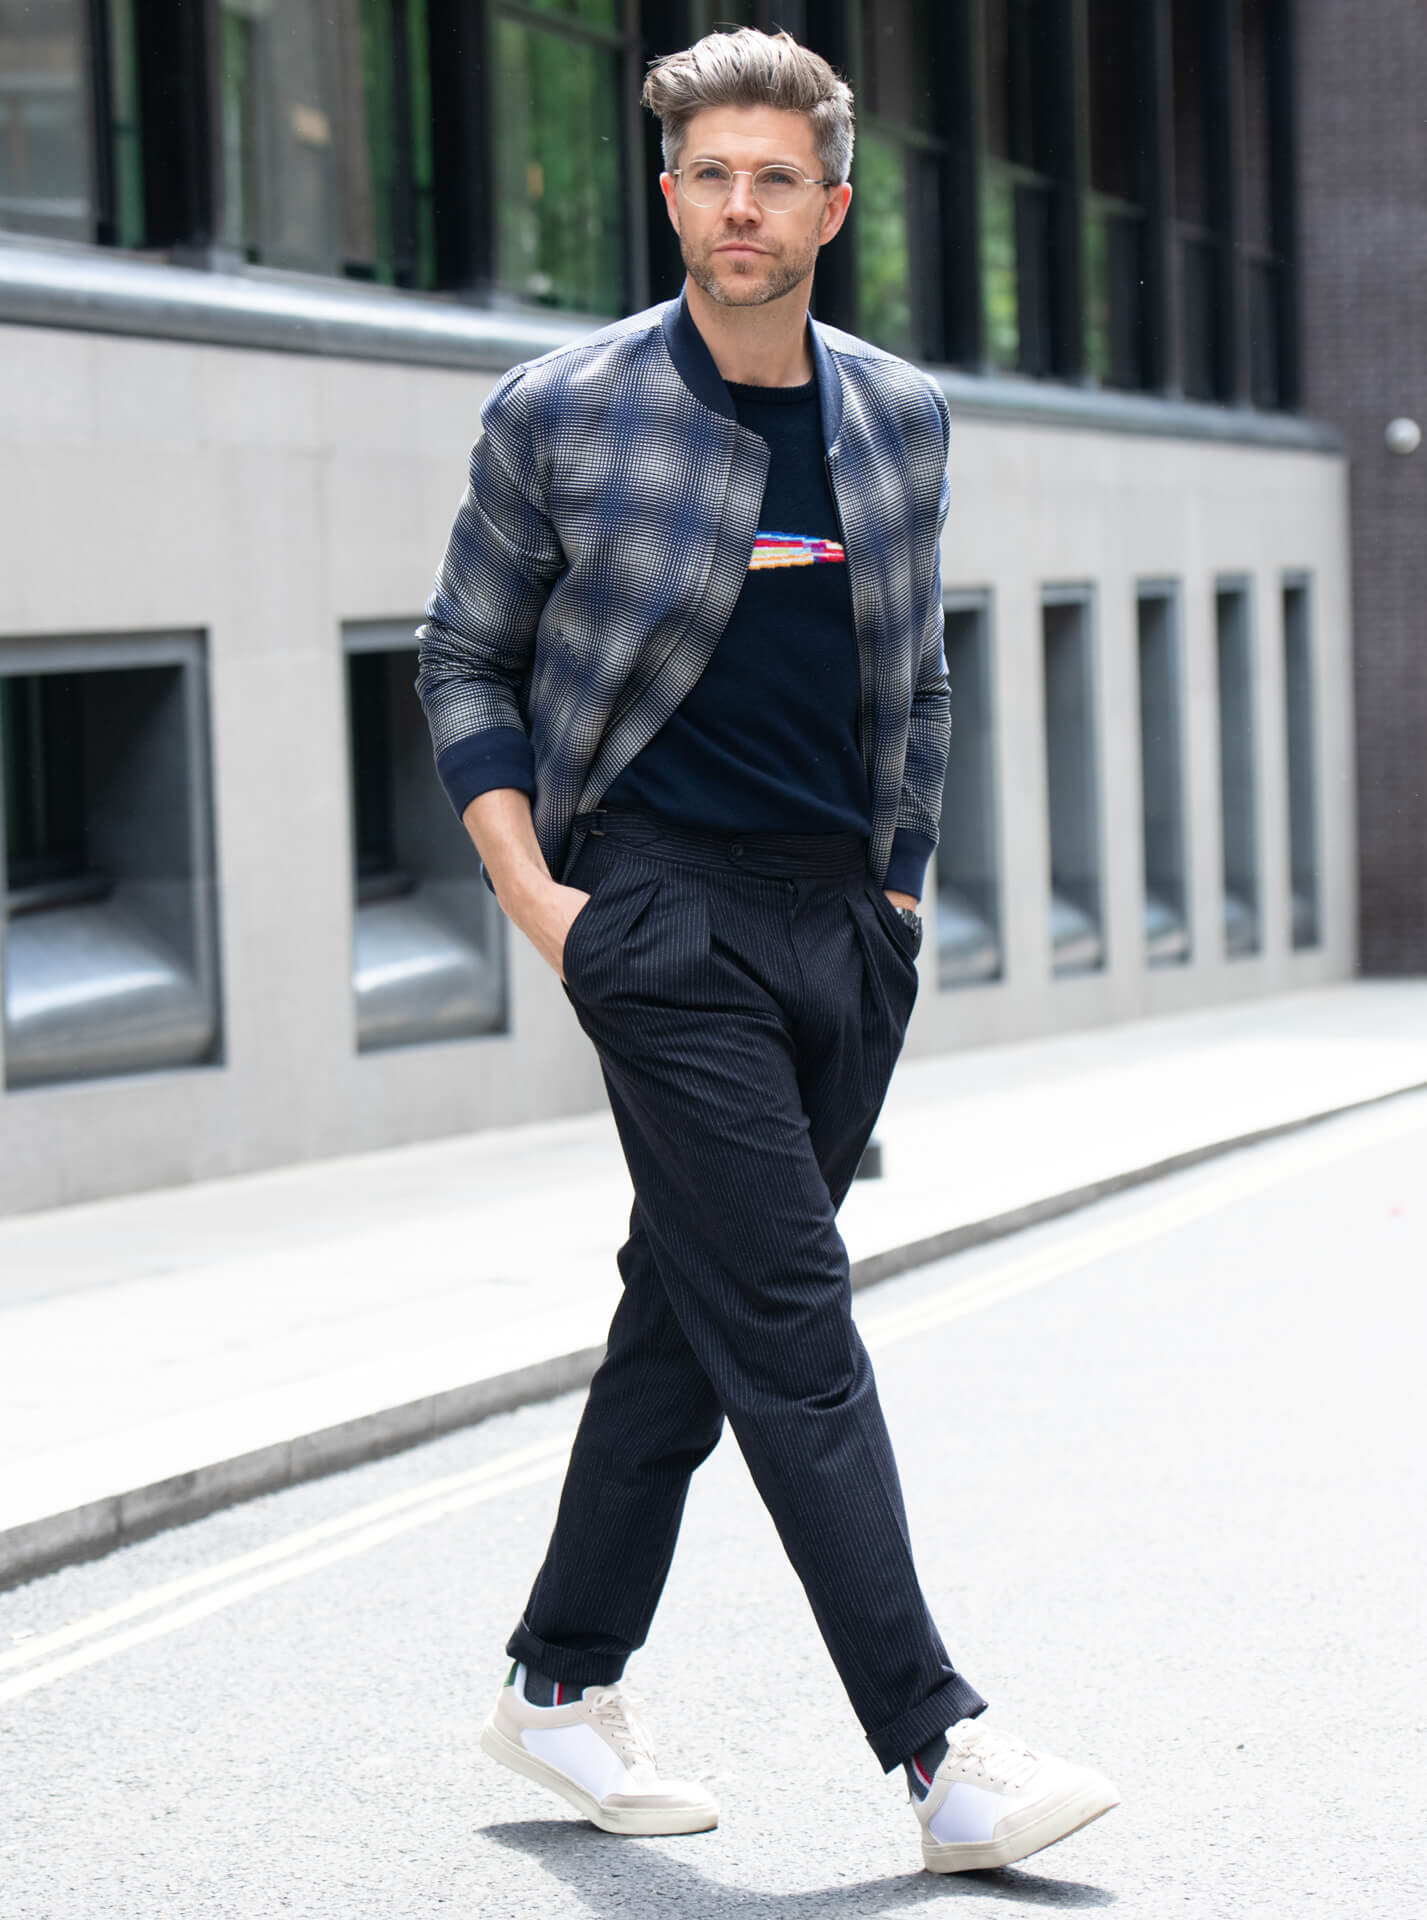 Männer Outfit Darren Kennedy Shoe Fashion